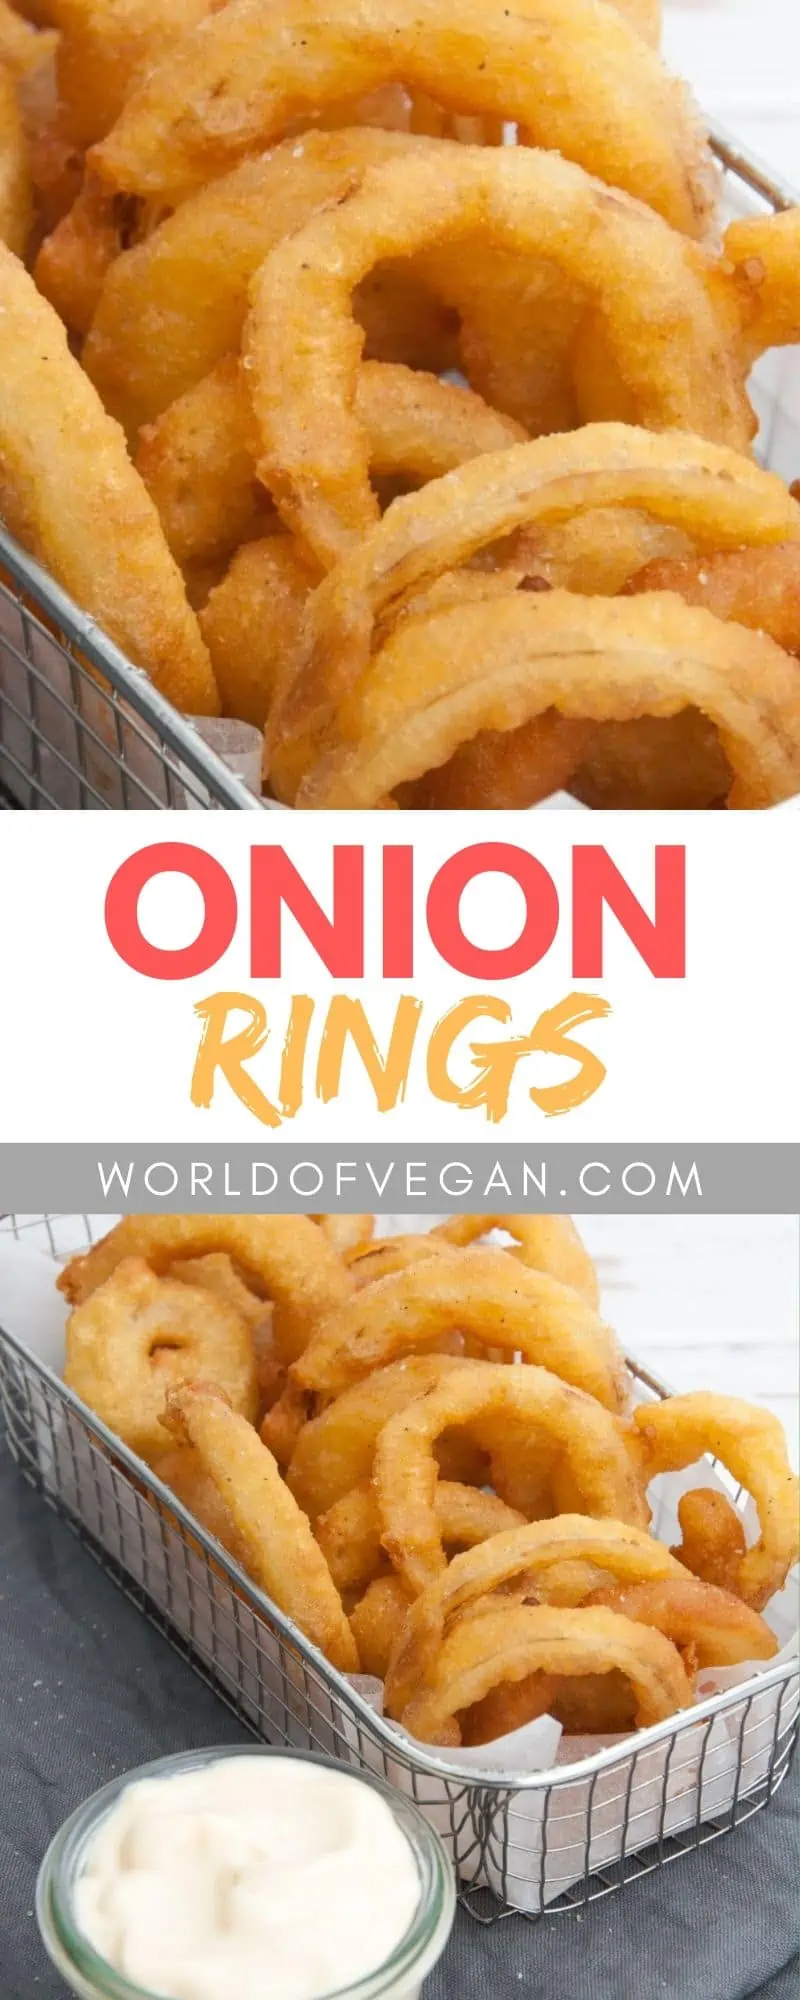 Onion Rings | Vegan Cravings | WorldofVegan.com | #vegan #appetizer #party #summer #holidays #worldofvegan